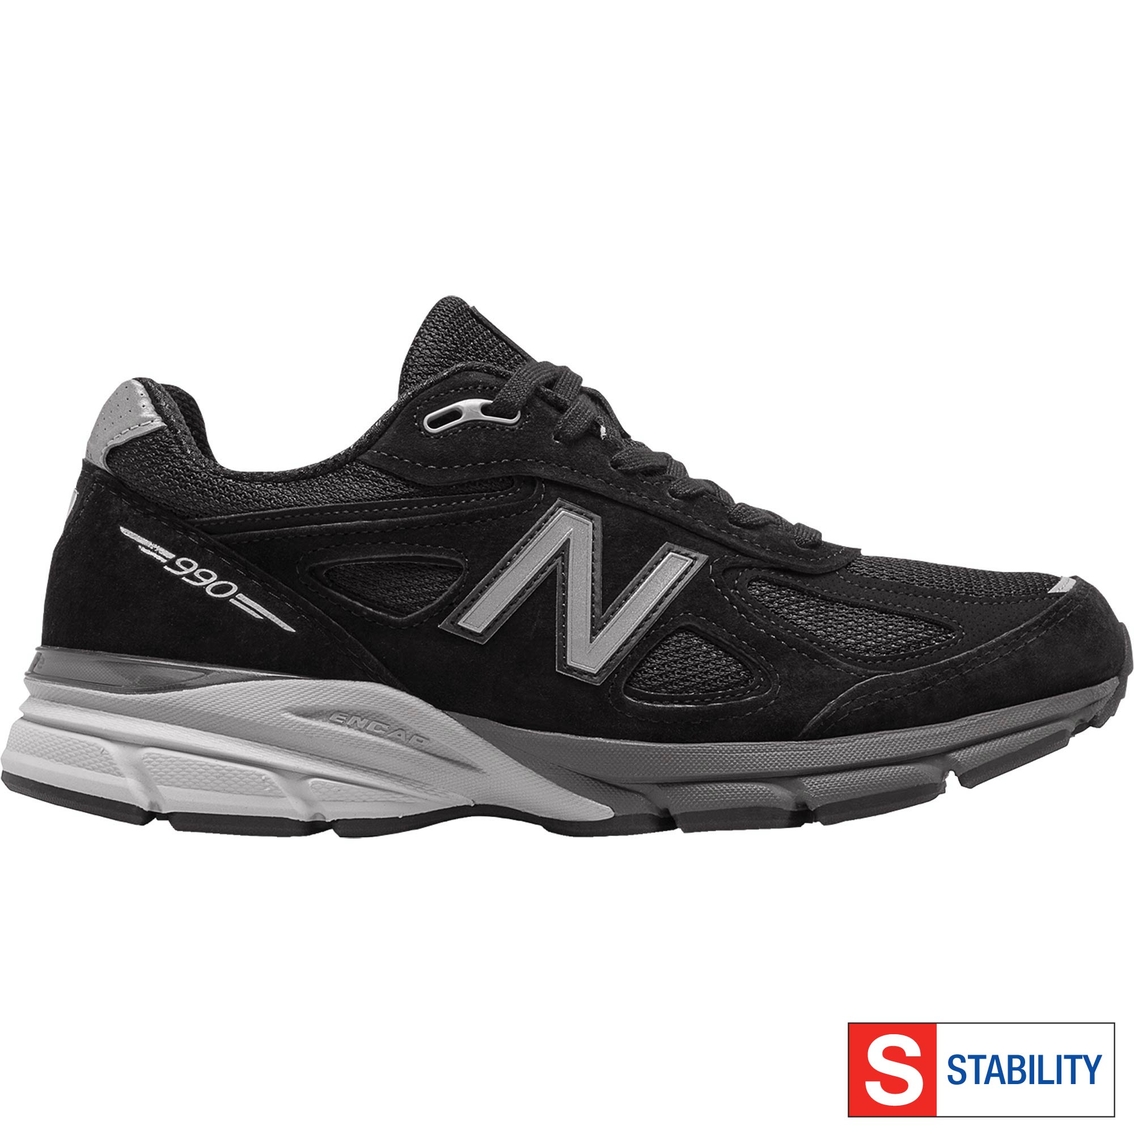 New Balance Men's M990bk4 Running Shoes | Running | Shoes | Shop The